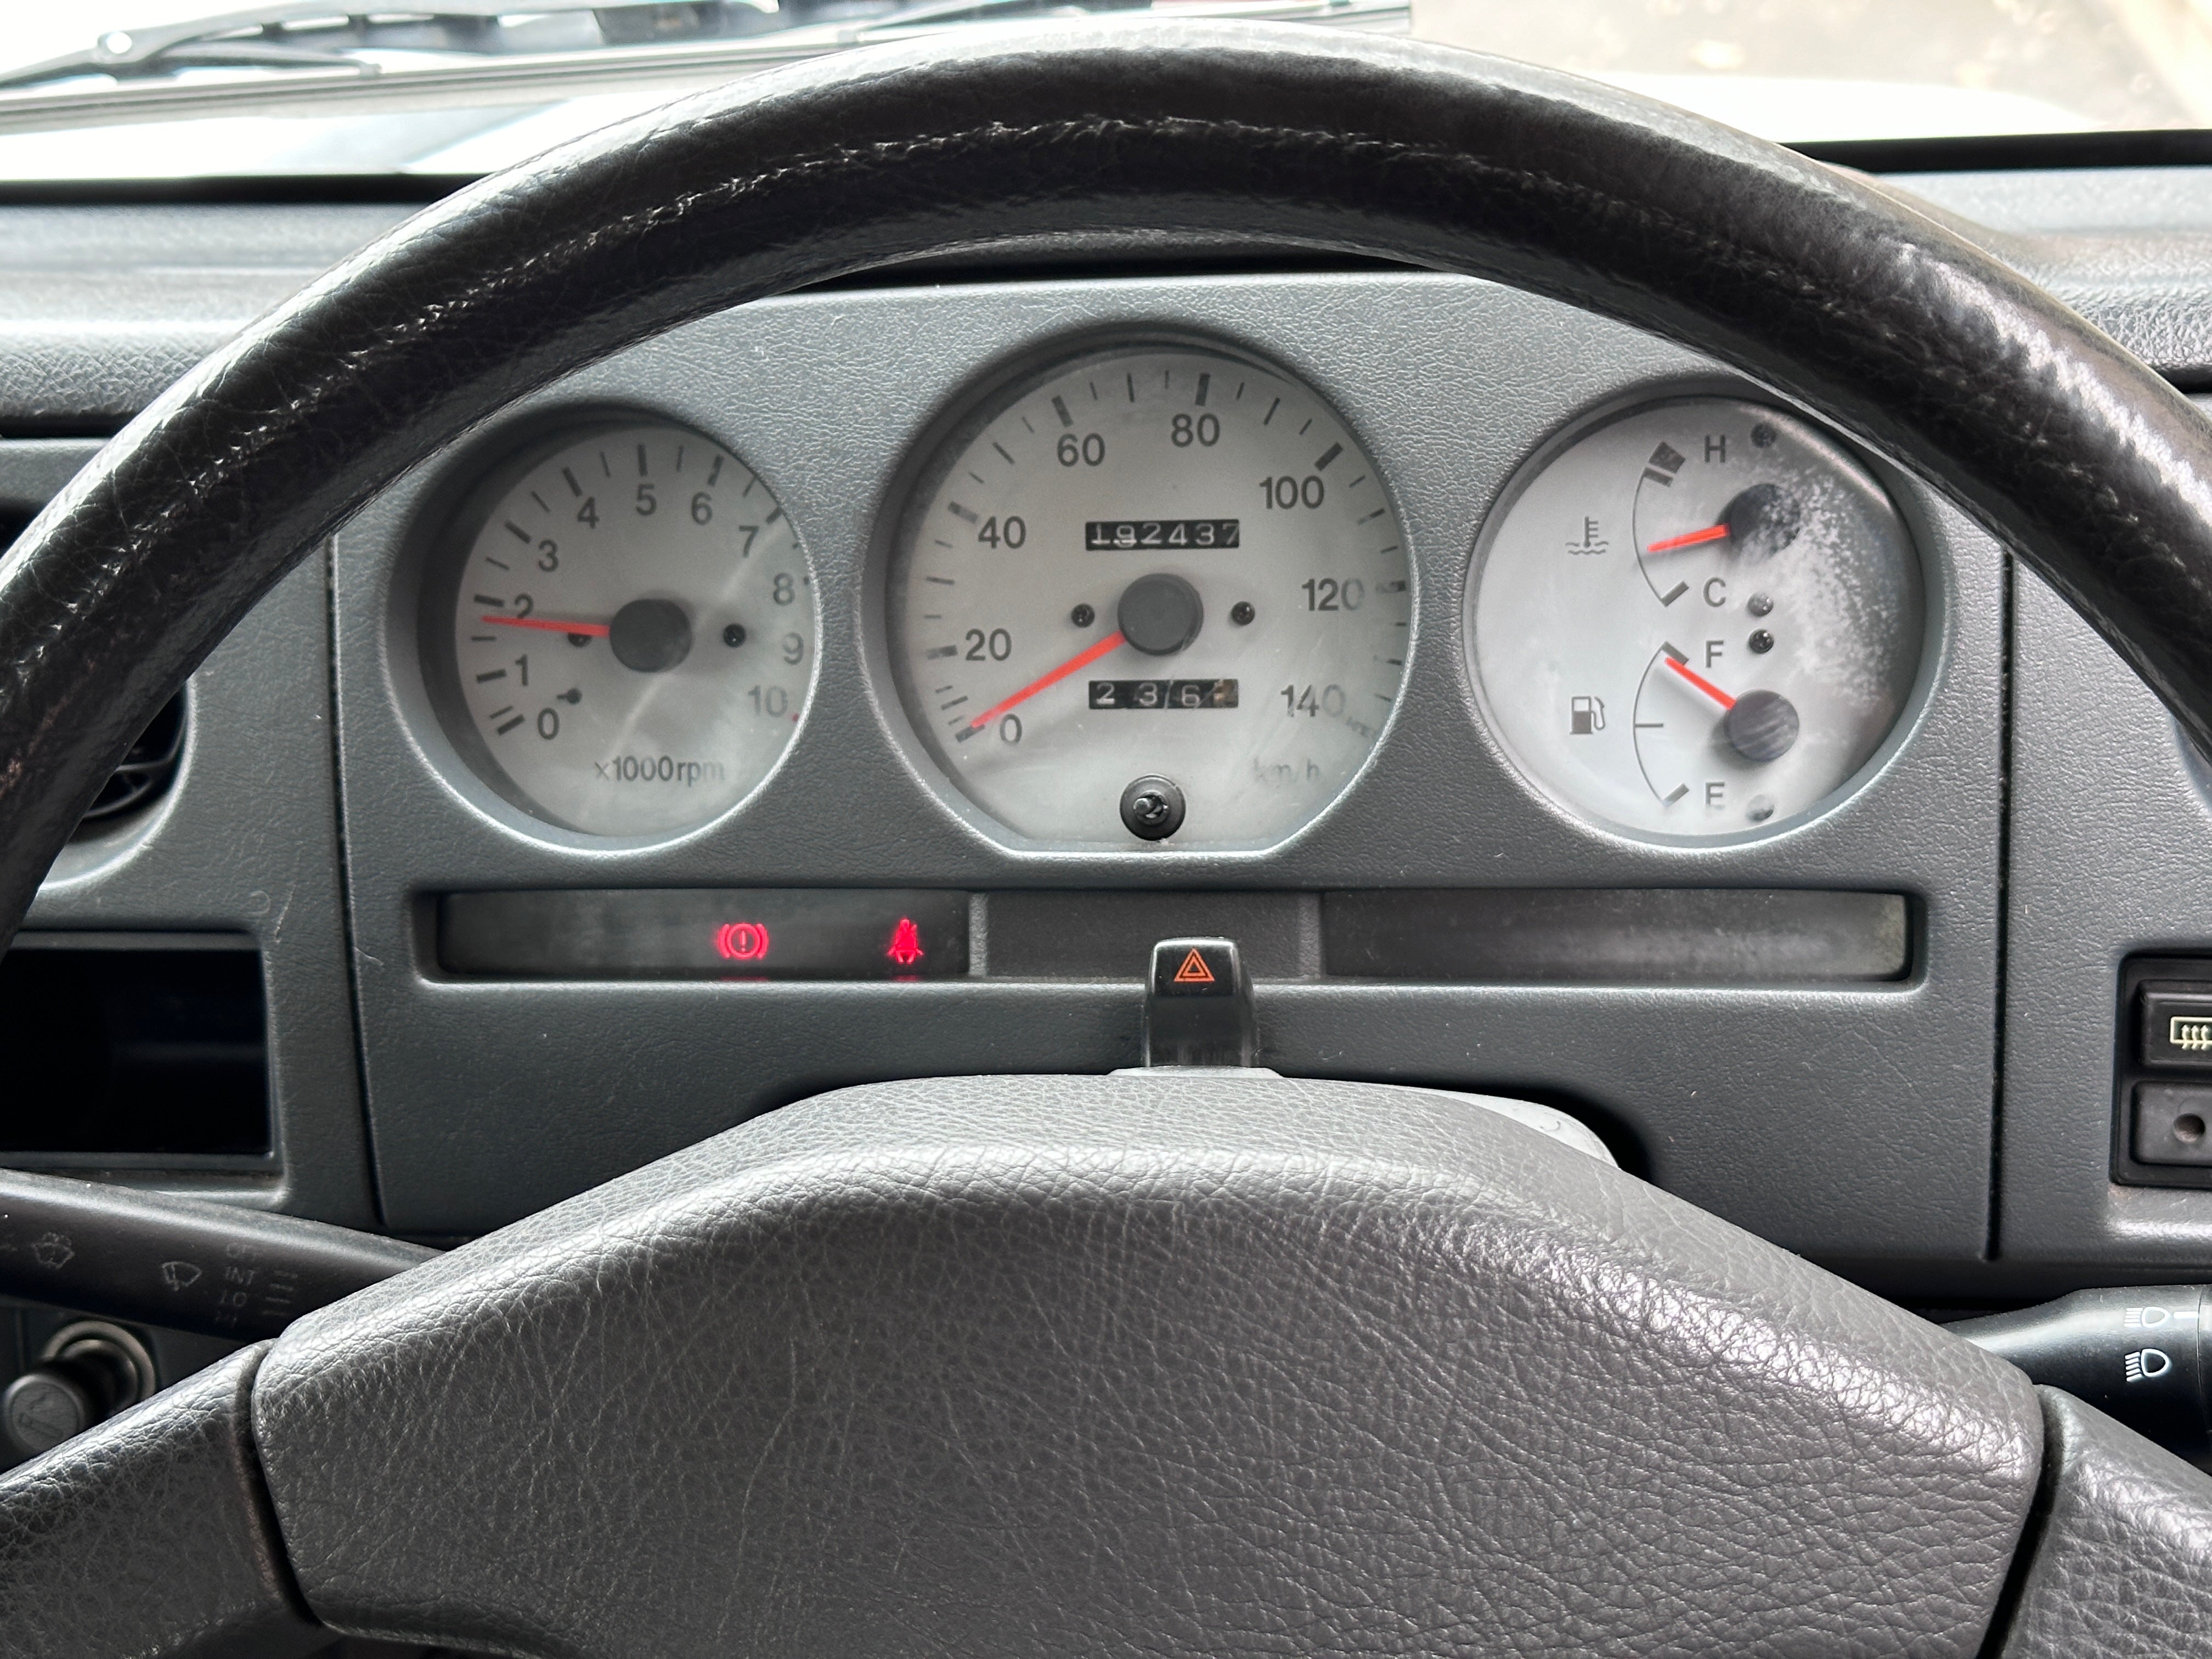 1996 Suzuki Jimny 4x4 5-Speed